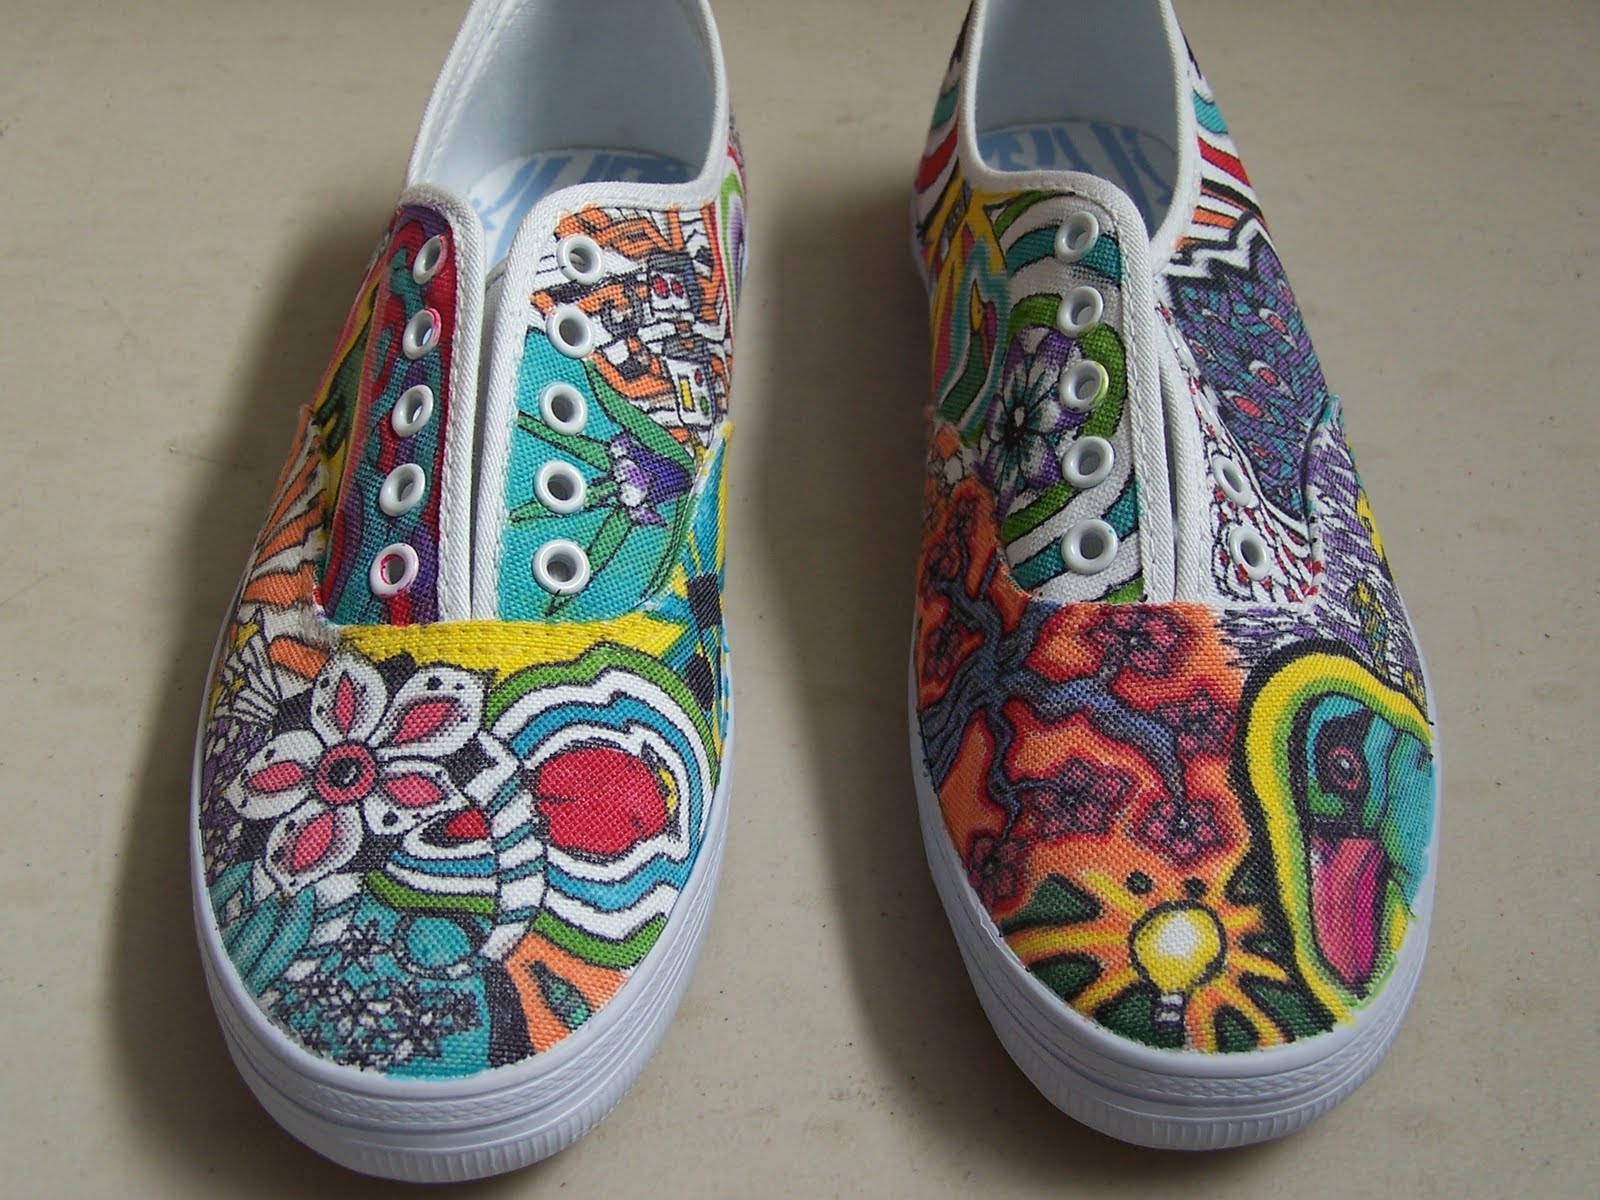 Austin B's Art: Shoe art